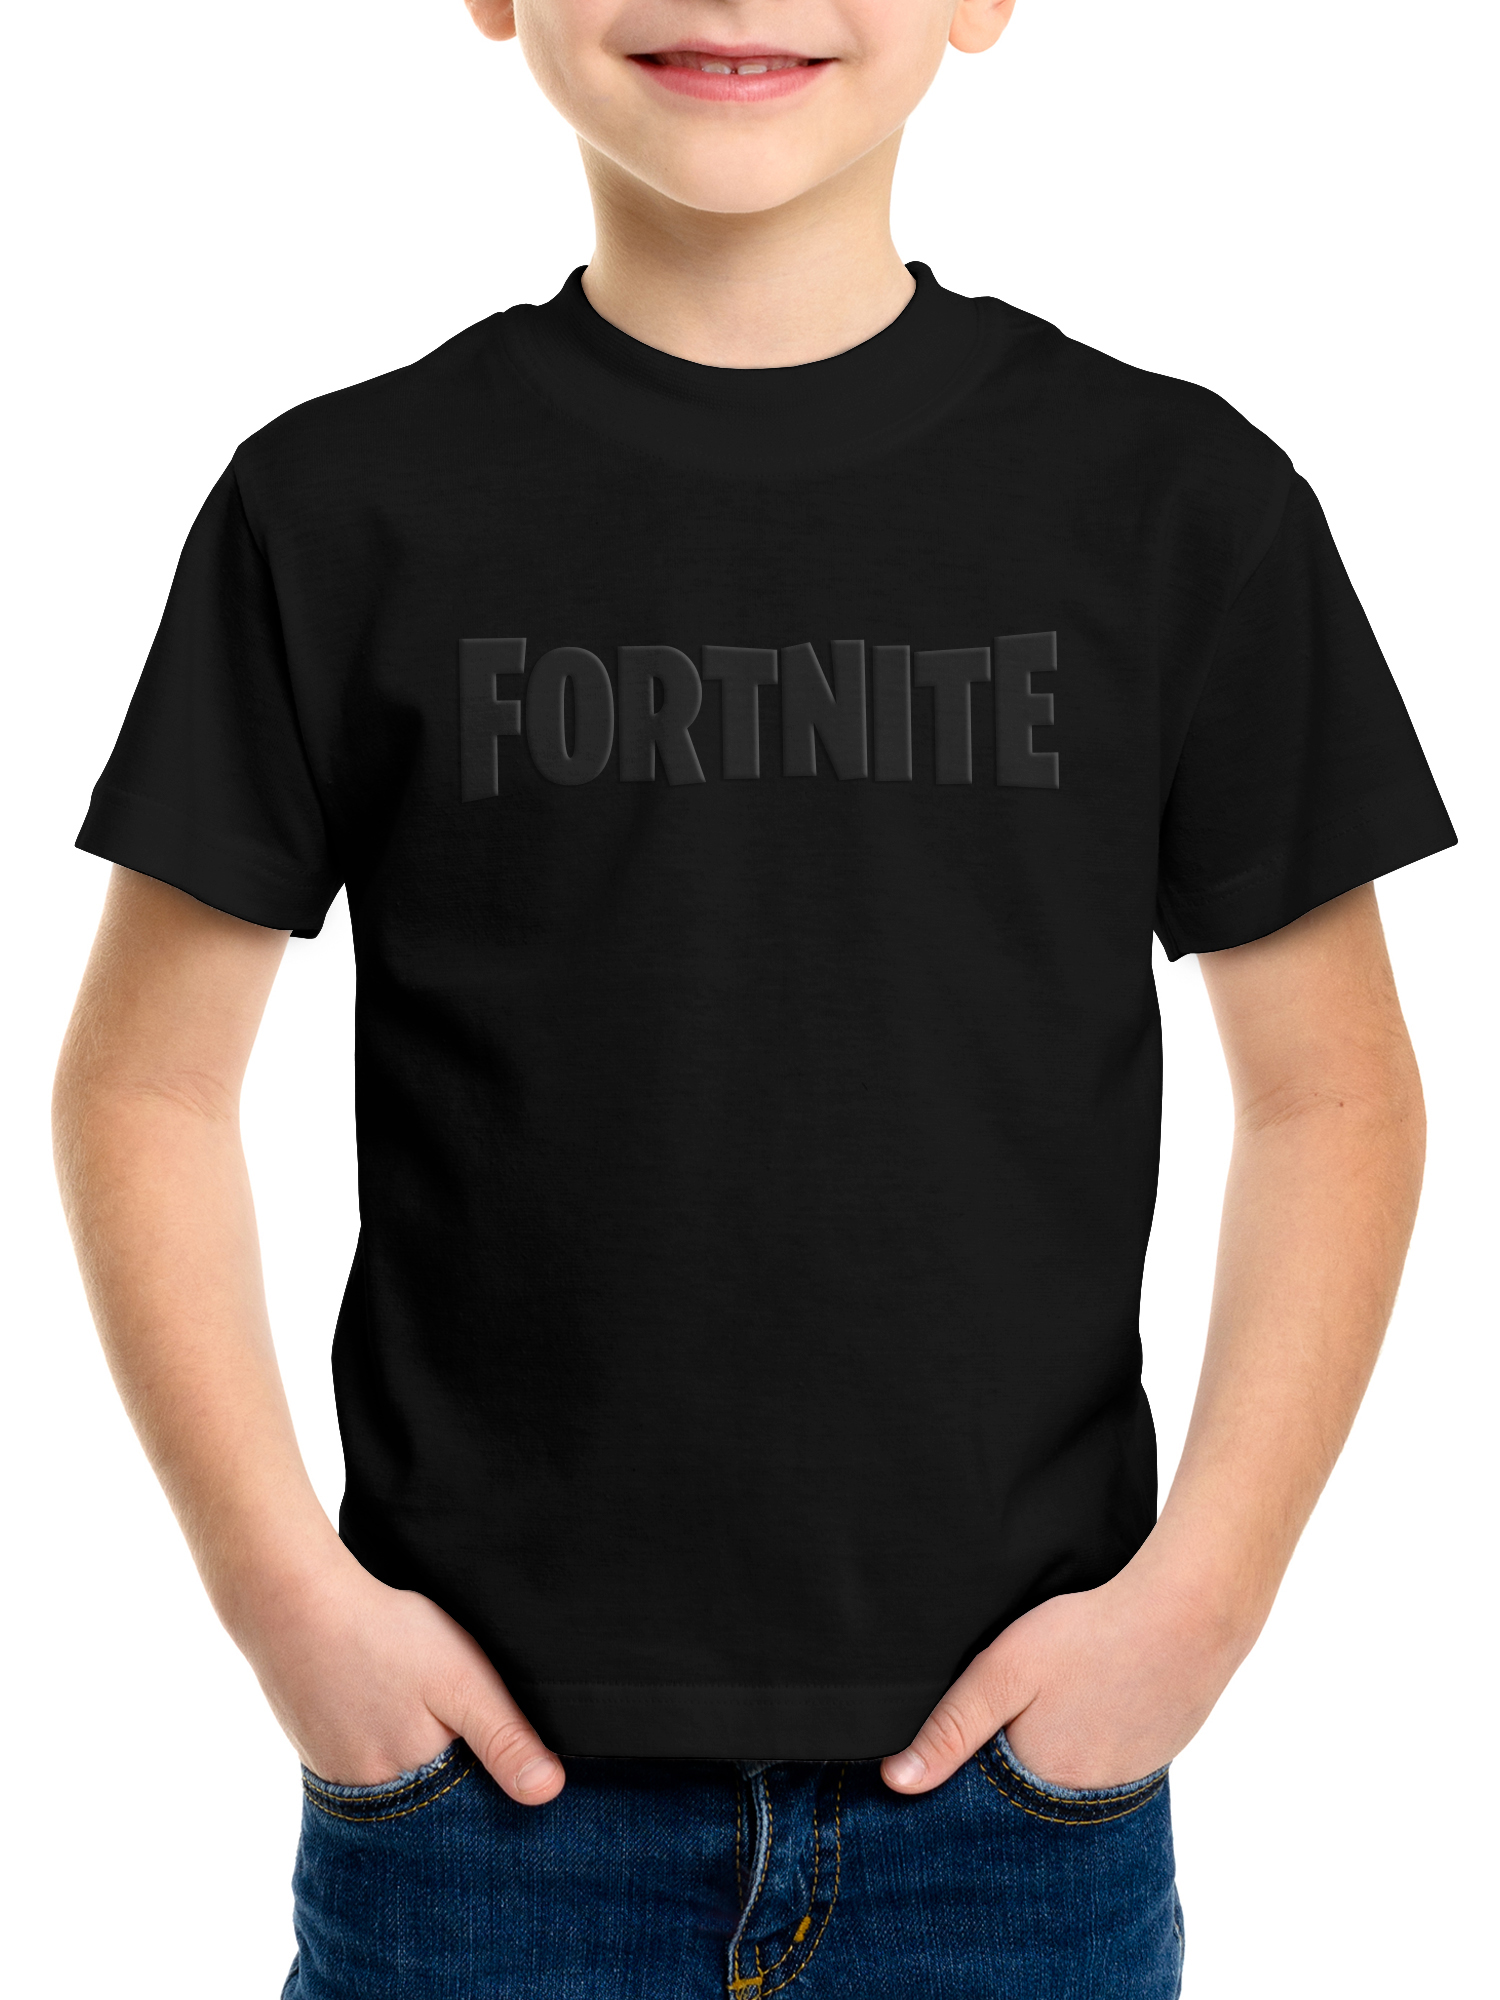 Fortnite Boys Logo Graphic T-Shirt, Sizes 8-18 - image 5 of 5